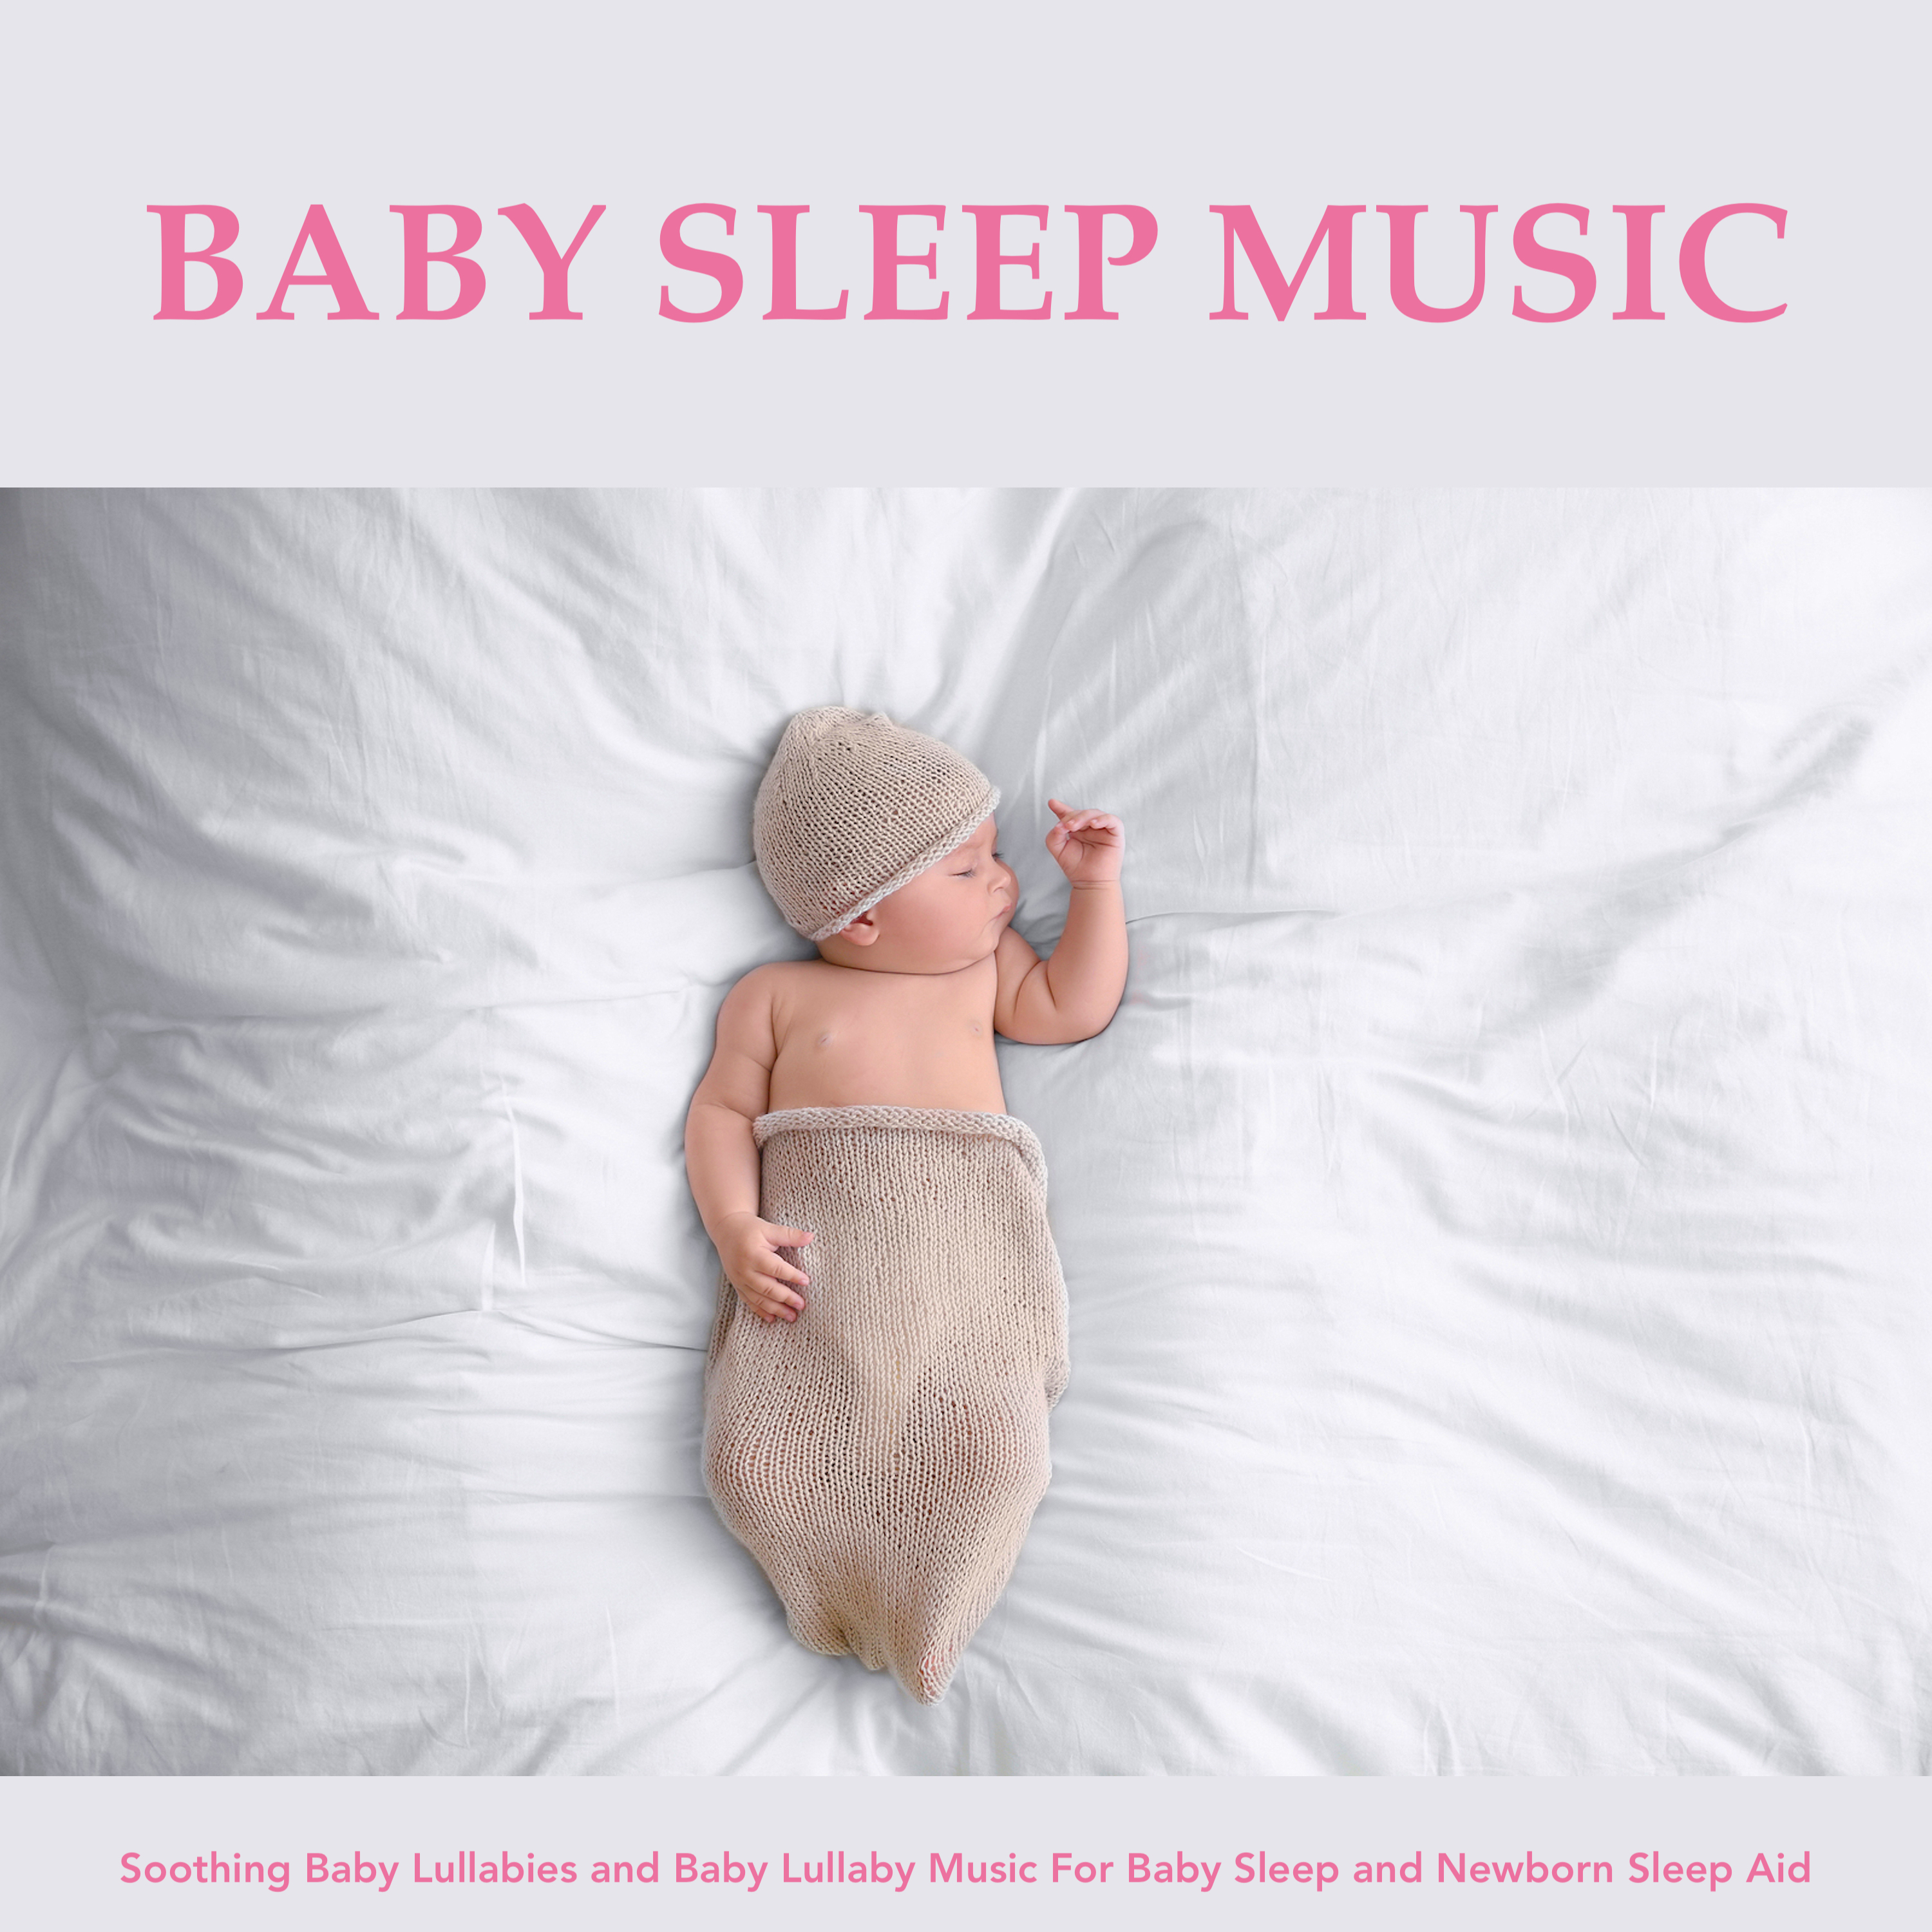 Baby Lullabies For Sleeping Through the Night